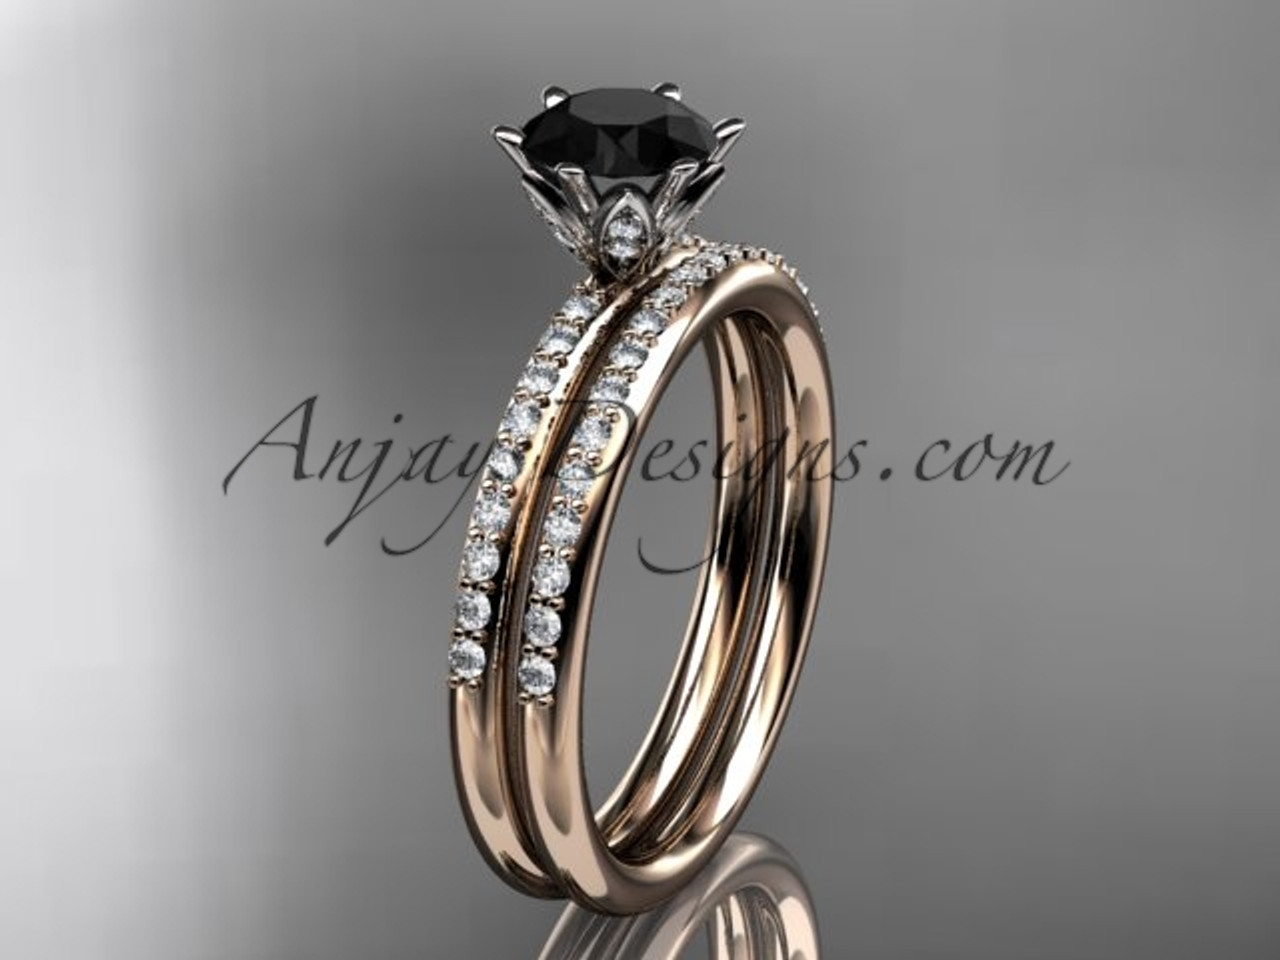 Glitz Design Diamond Wedding Ring Set for Women Round brilliant Halo Rings  14K Gold 1.70 carat (G-H/I1-I2)